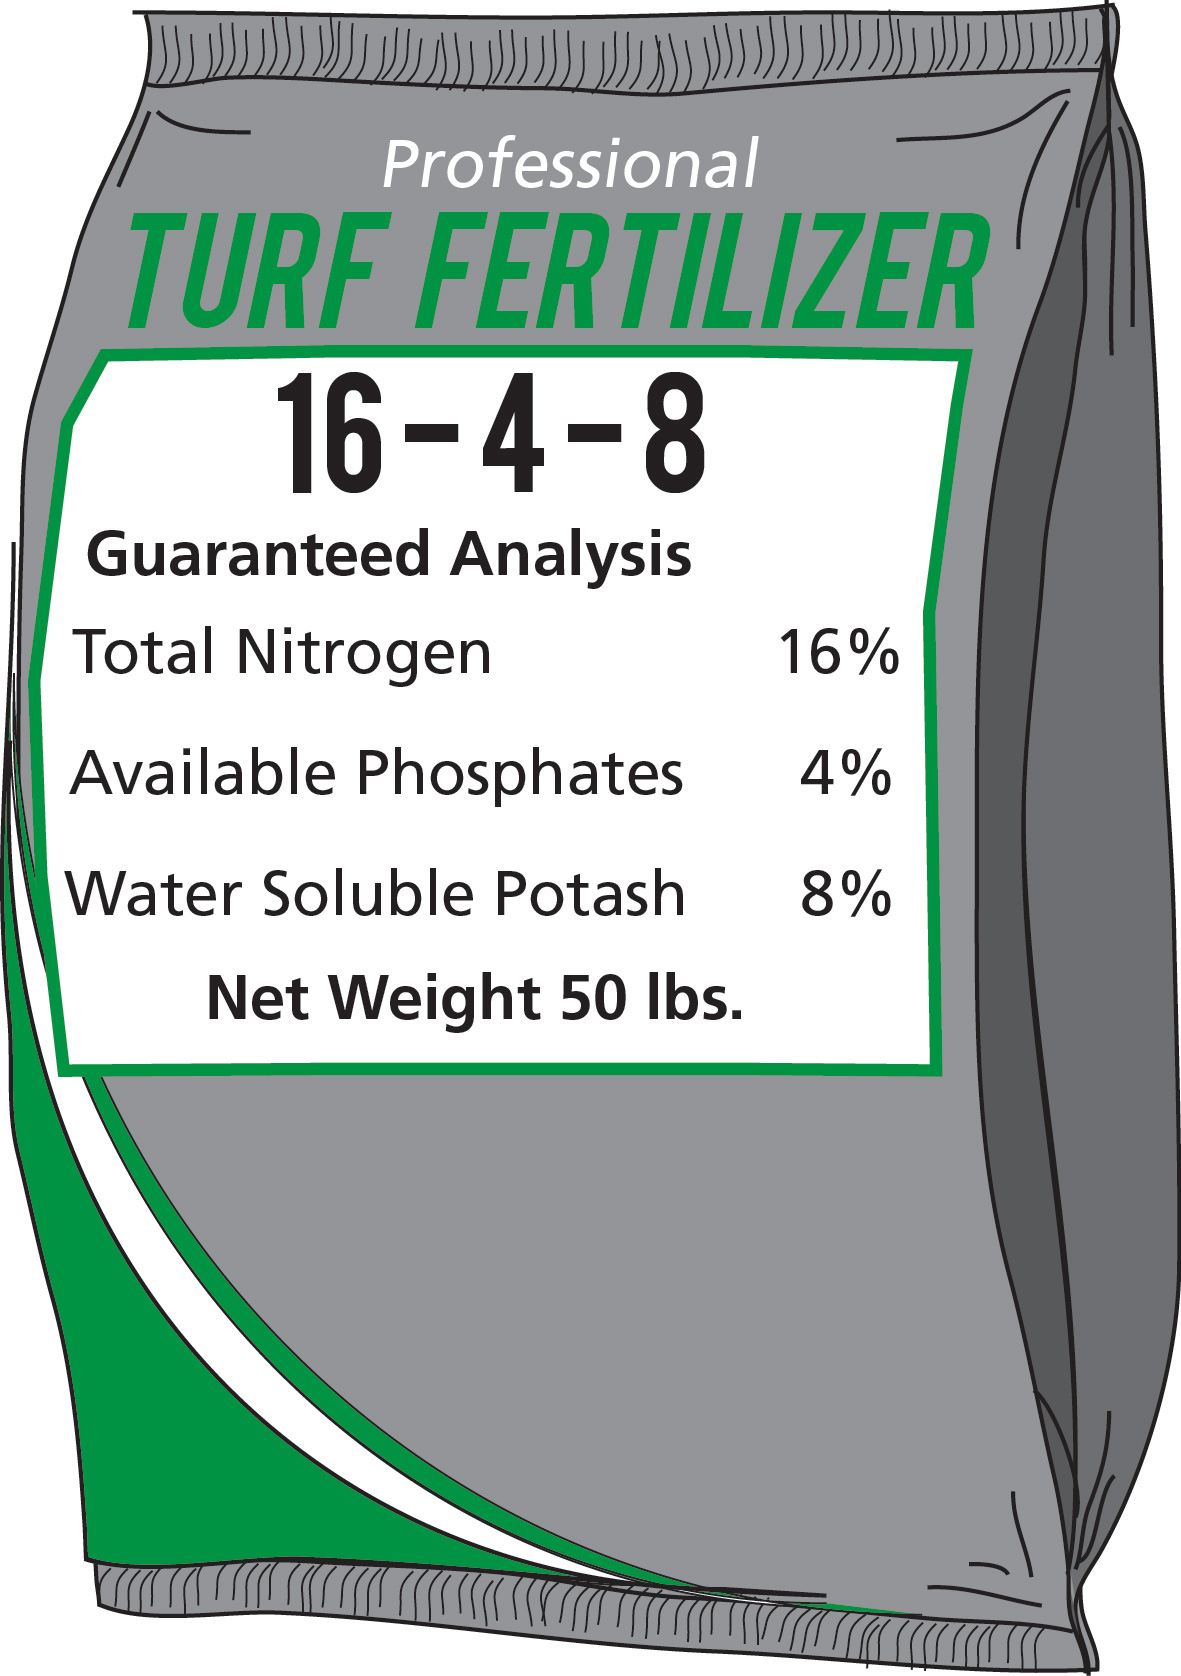 Bag of fertilizer labeled as professional turf fertilizer with 16-4-8 percentages of nitrogen, phosphate, and potash.